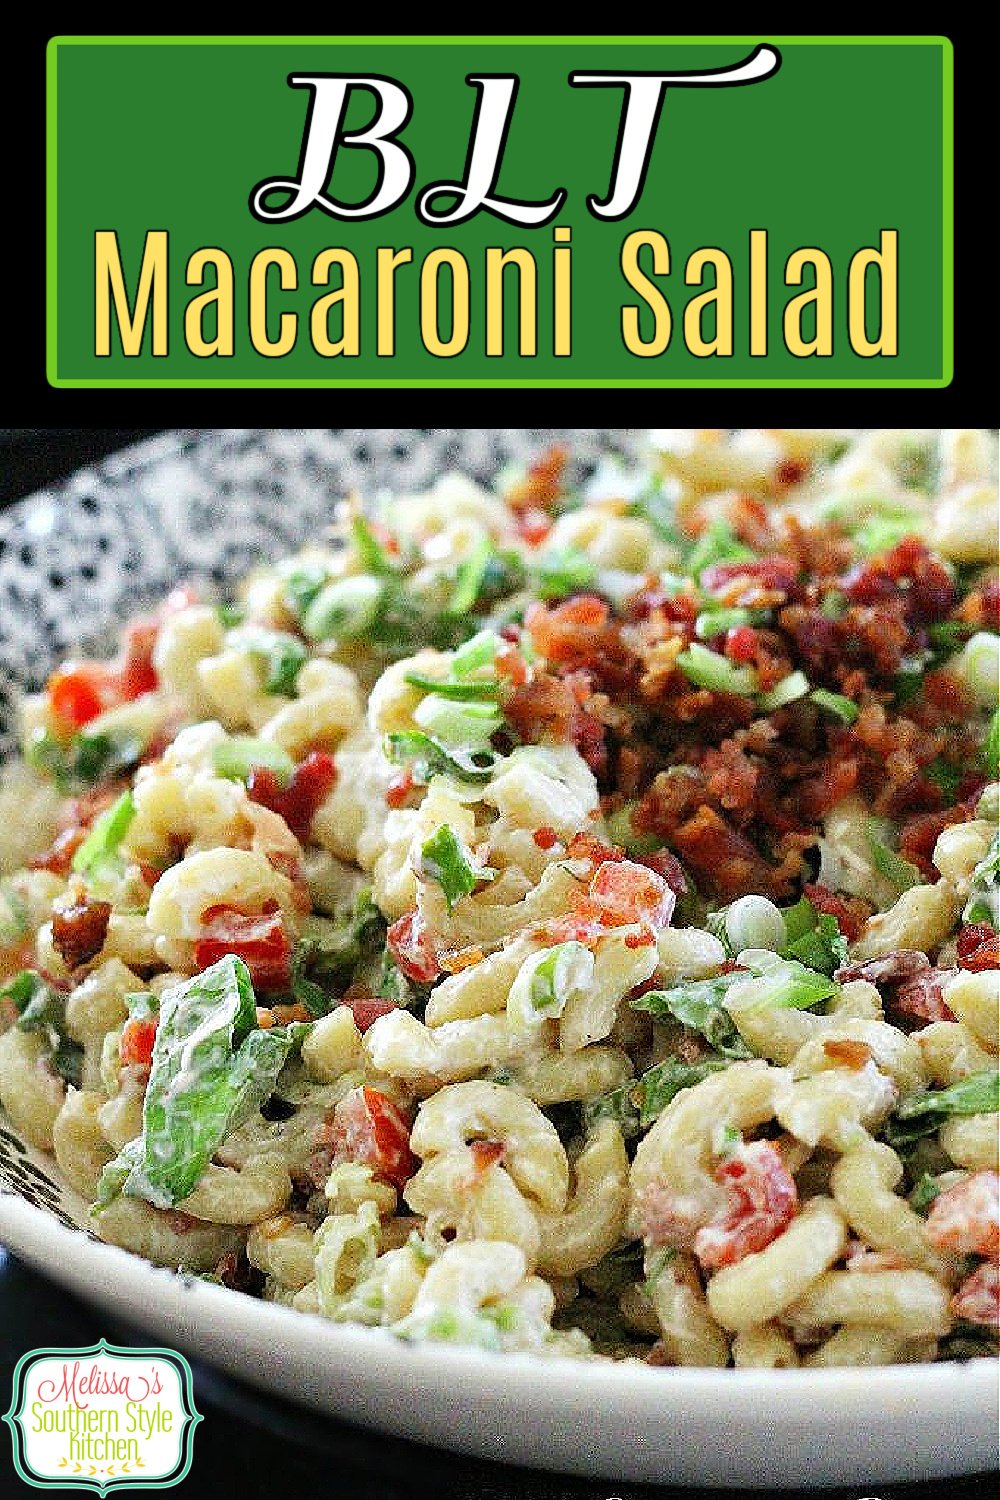 Shake-up your side dishes with this BLT Macaroni Salad #macaronisalad #BLT #bacon #macaroni #pastasalad #saladrecipes #dinner #dinnerideas #salads #food #recipes #southernfood #southernrecipes via @melissasssk